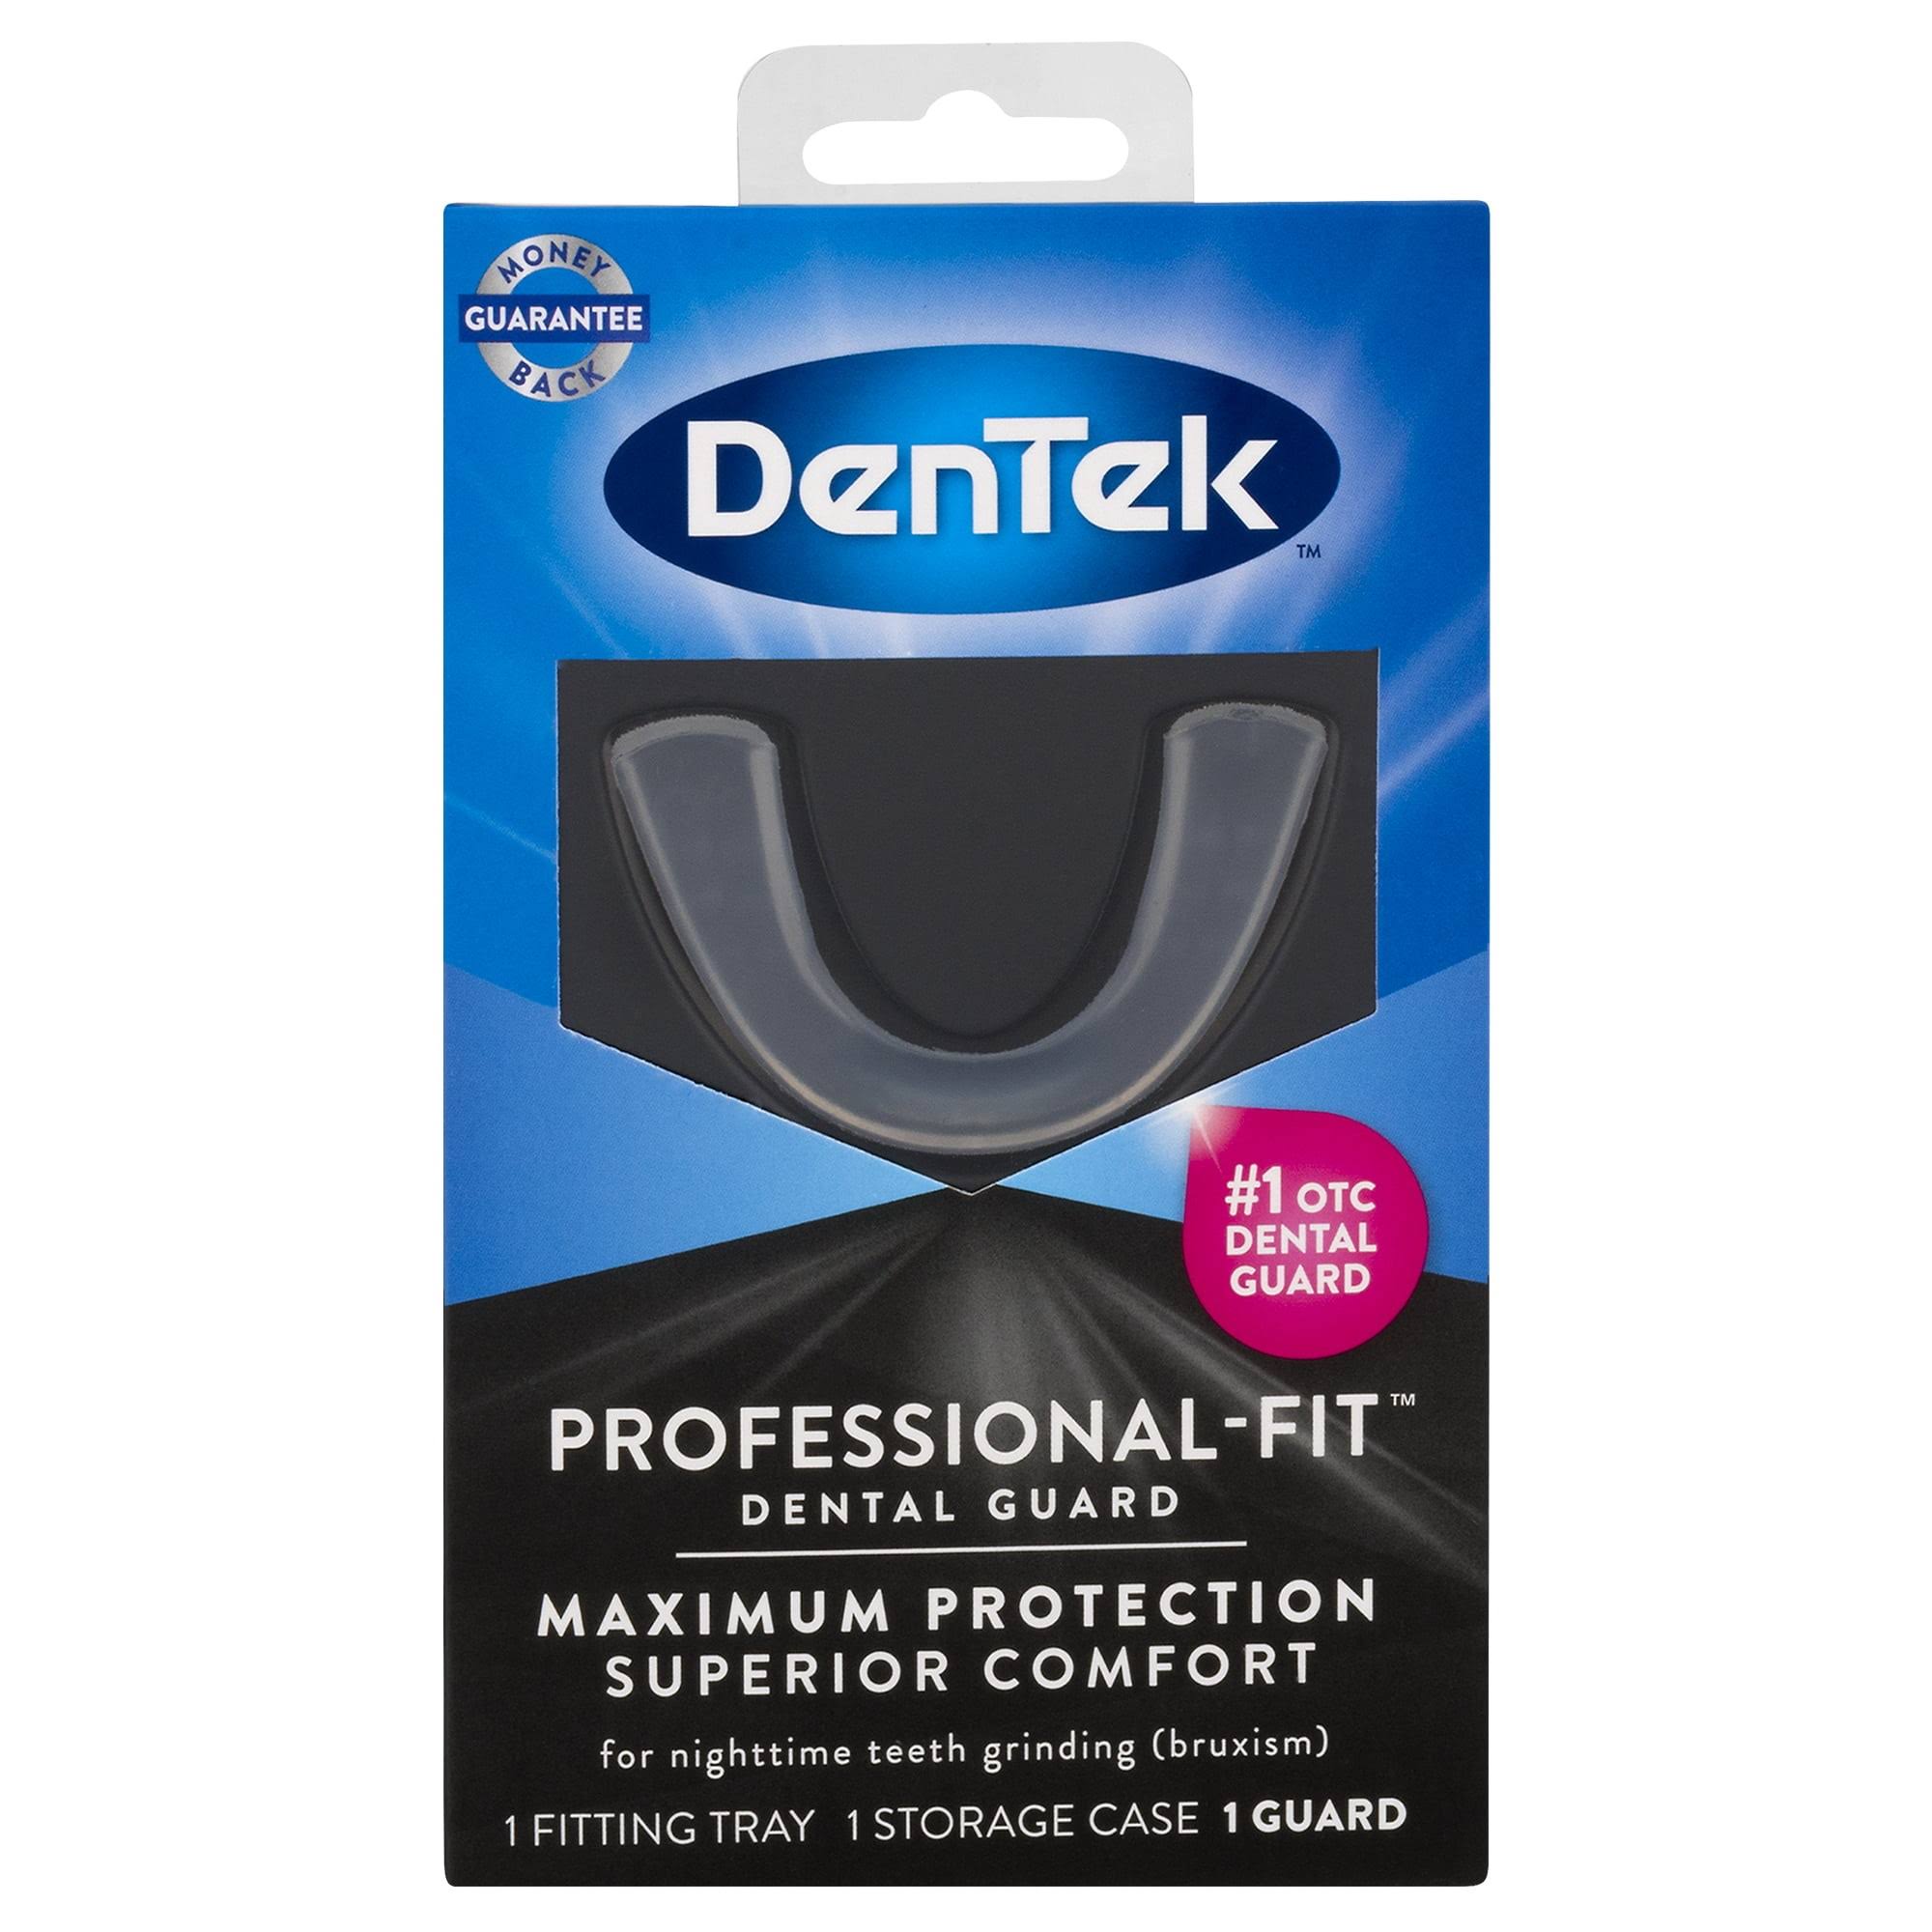 DenTek Professional Fit Maximum Protection Dental Guard - 1 Each